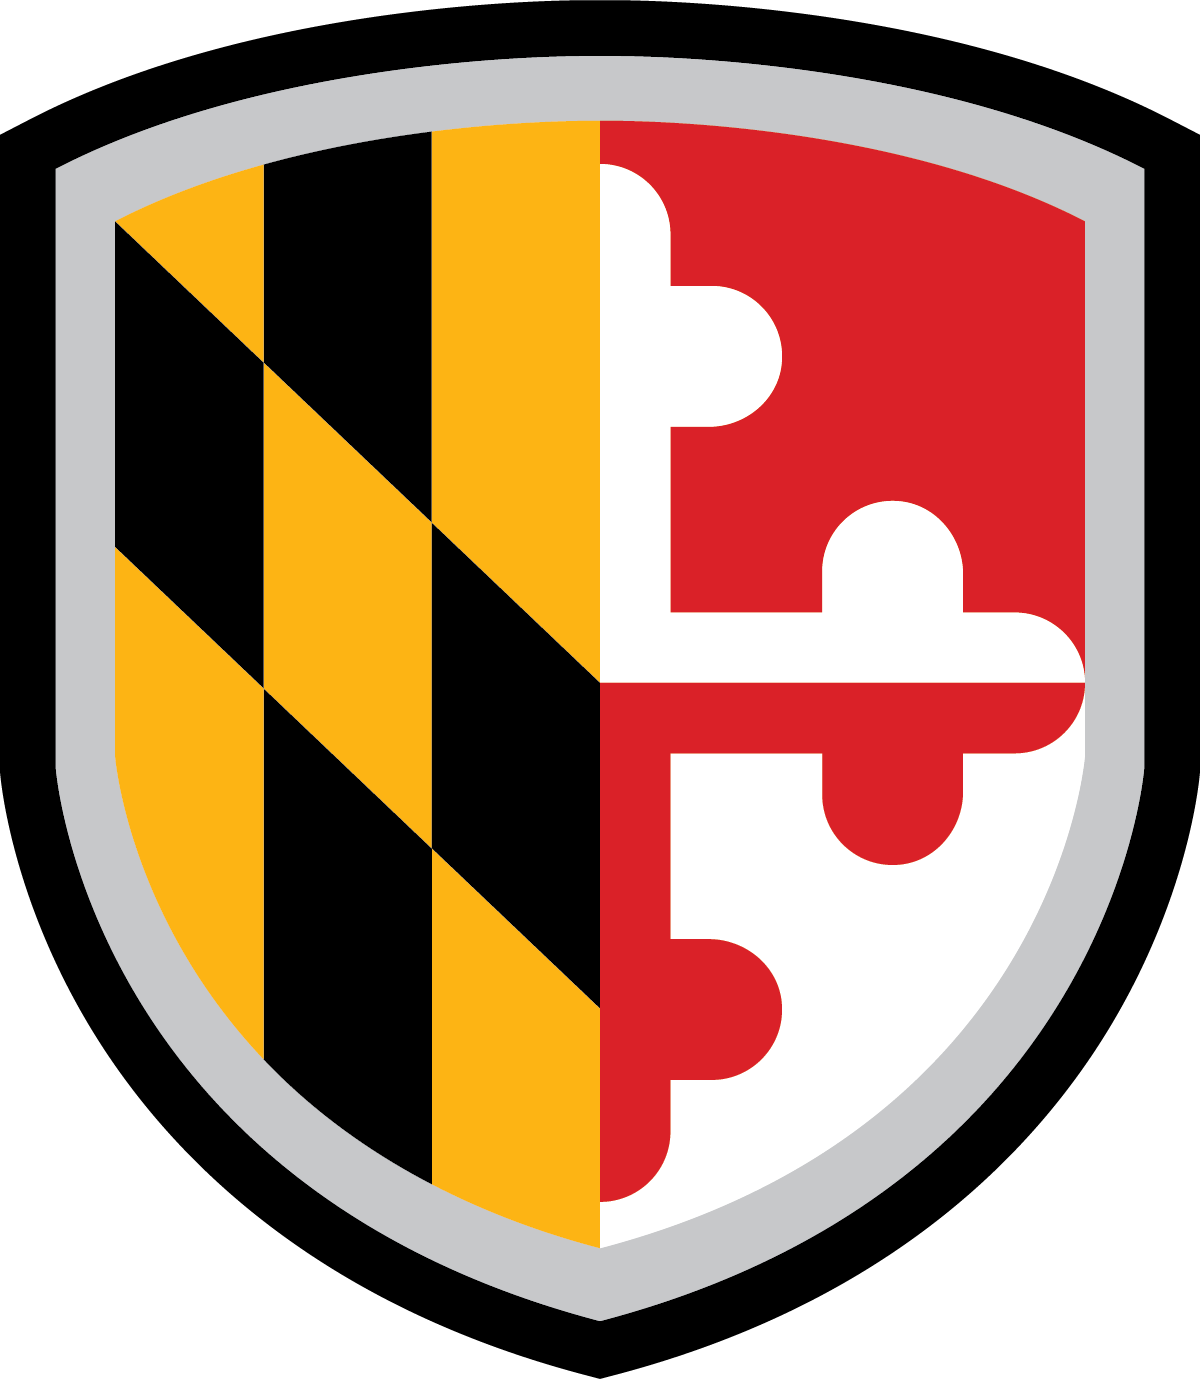 University of Maryland, Baltimore County Logo